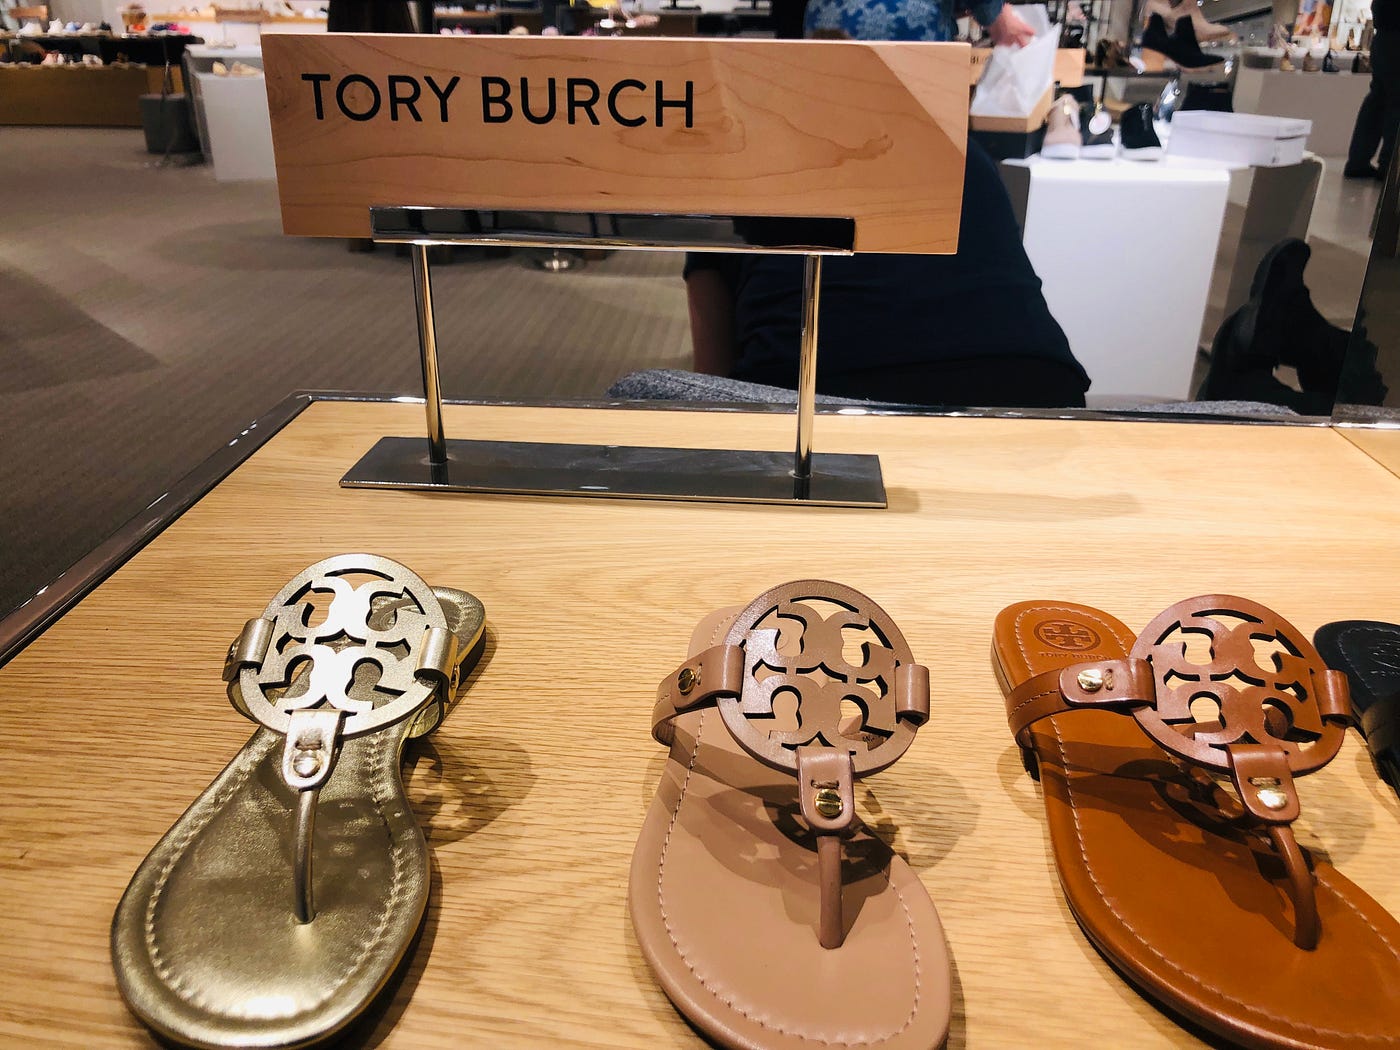 Tory Burch Sandals Are Worth the Price | by Kimberly Carlson Aesara |  ILLUMINATION | Medium